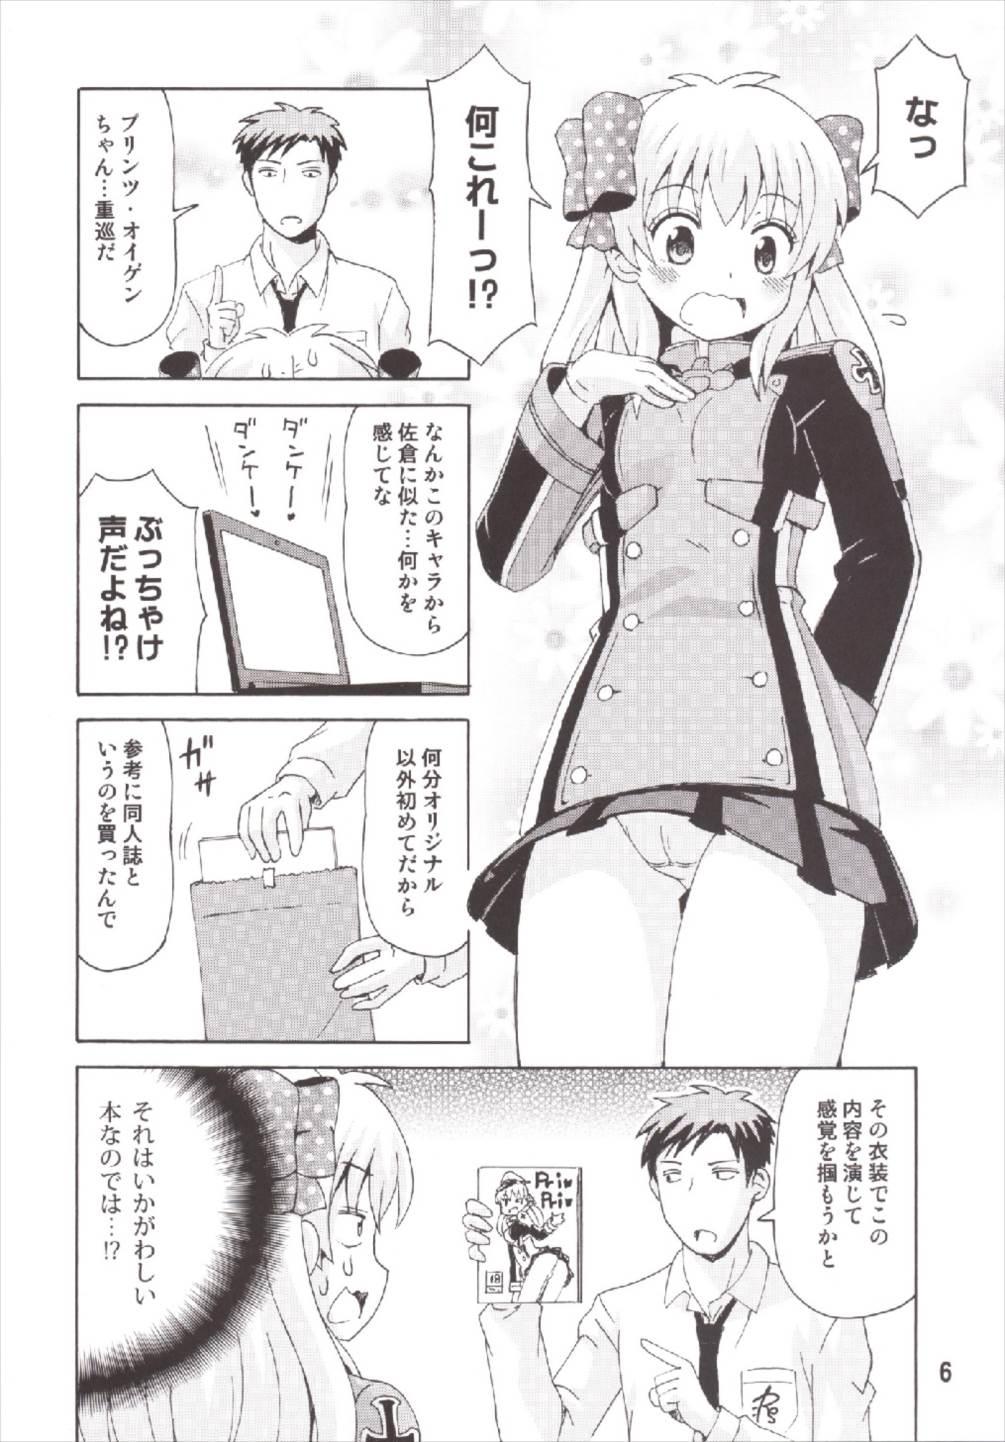 Seinen Manga Chiyo-chan 5